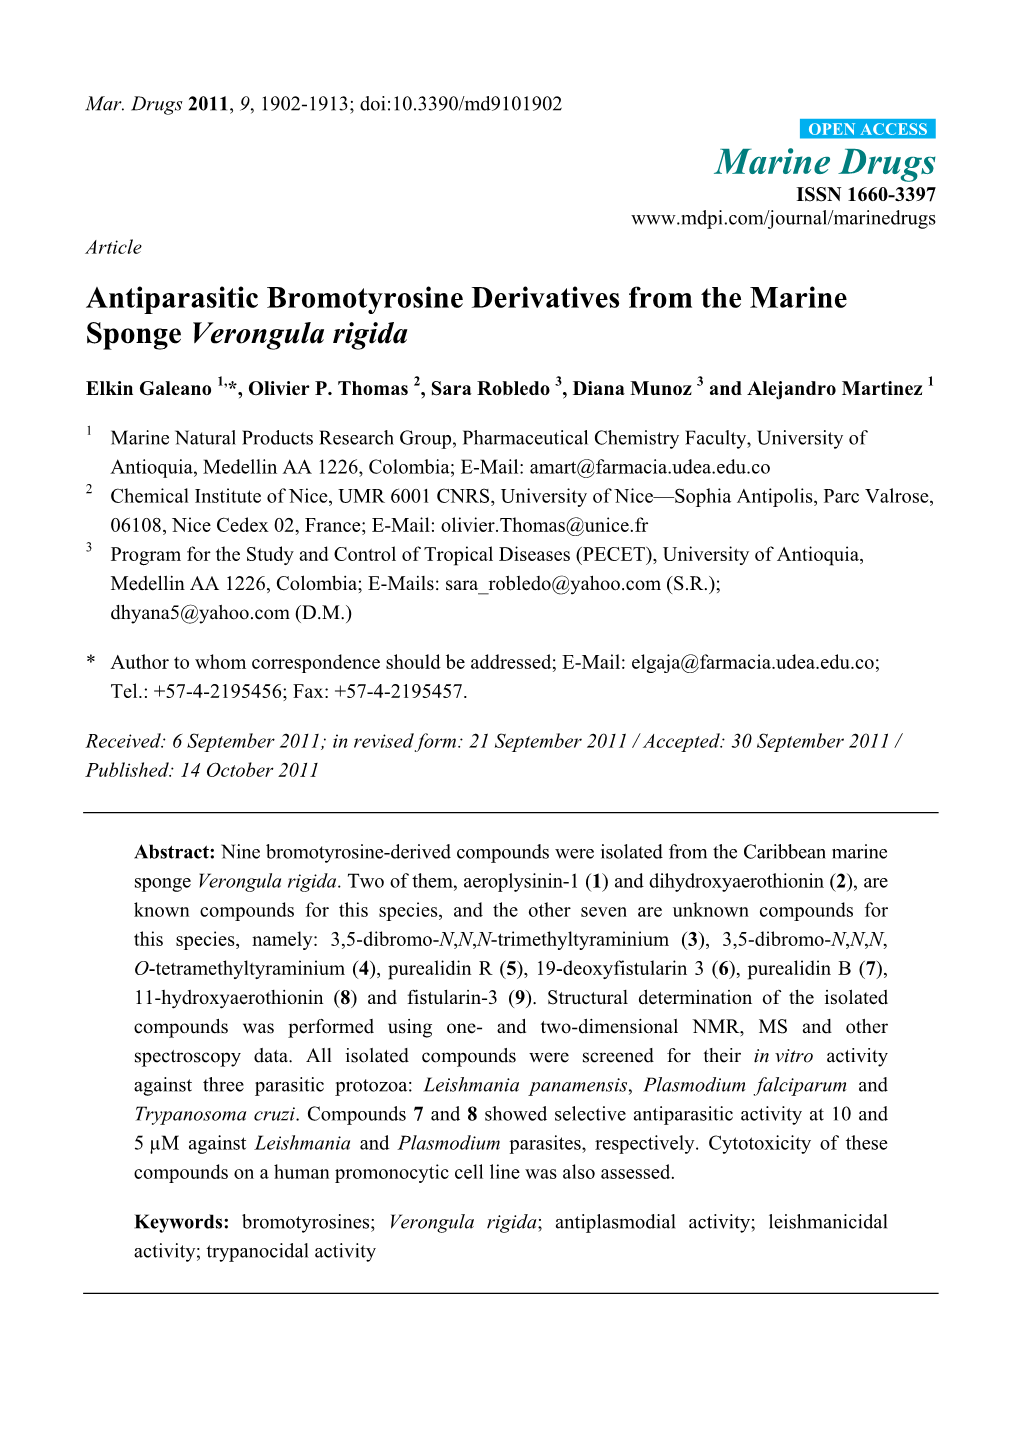 Antiparasitic Bromotyrosine Derivatives from the Marine Sponge Verongula Rigida